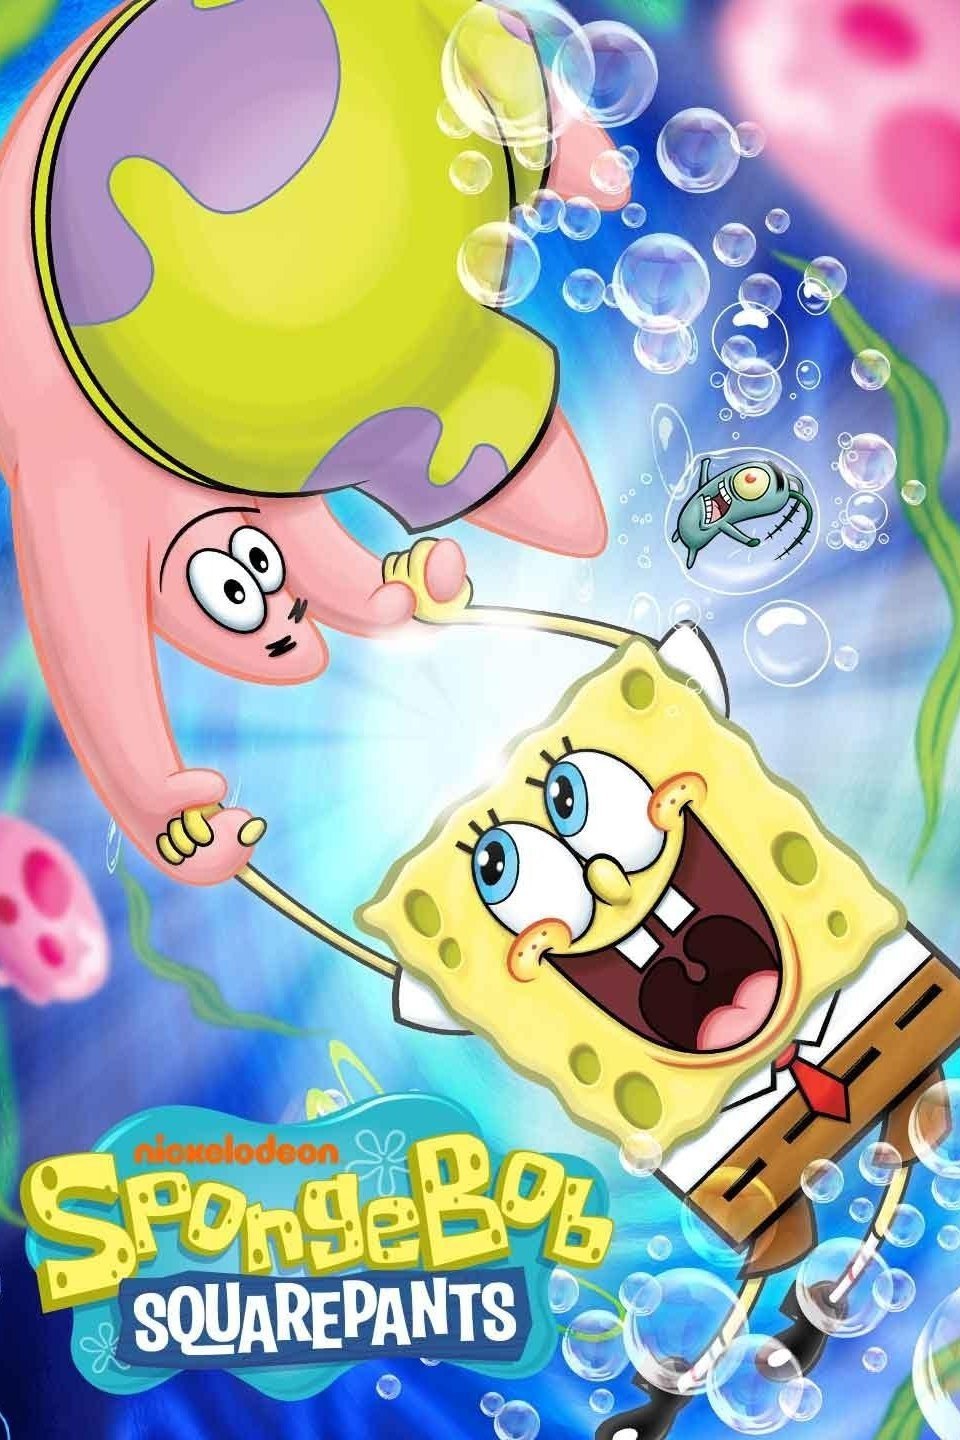 TV cartoon series SpongeBob character and other characters fun games 2K  wallpaper download